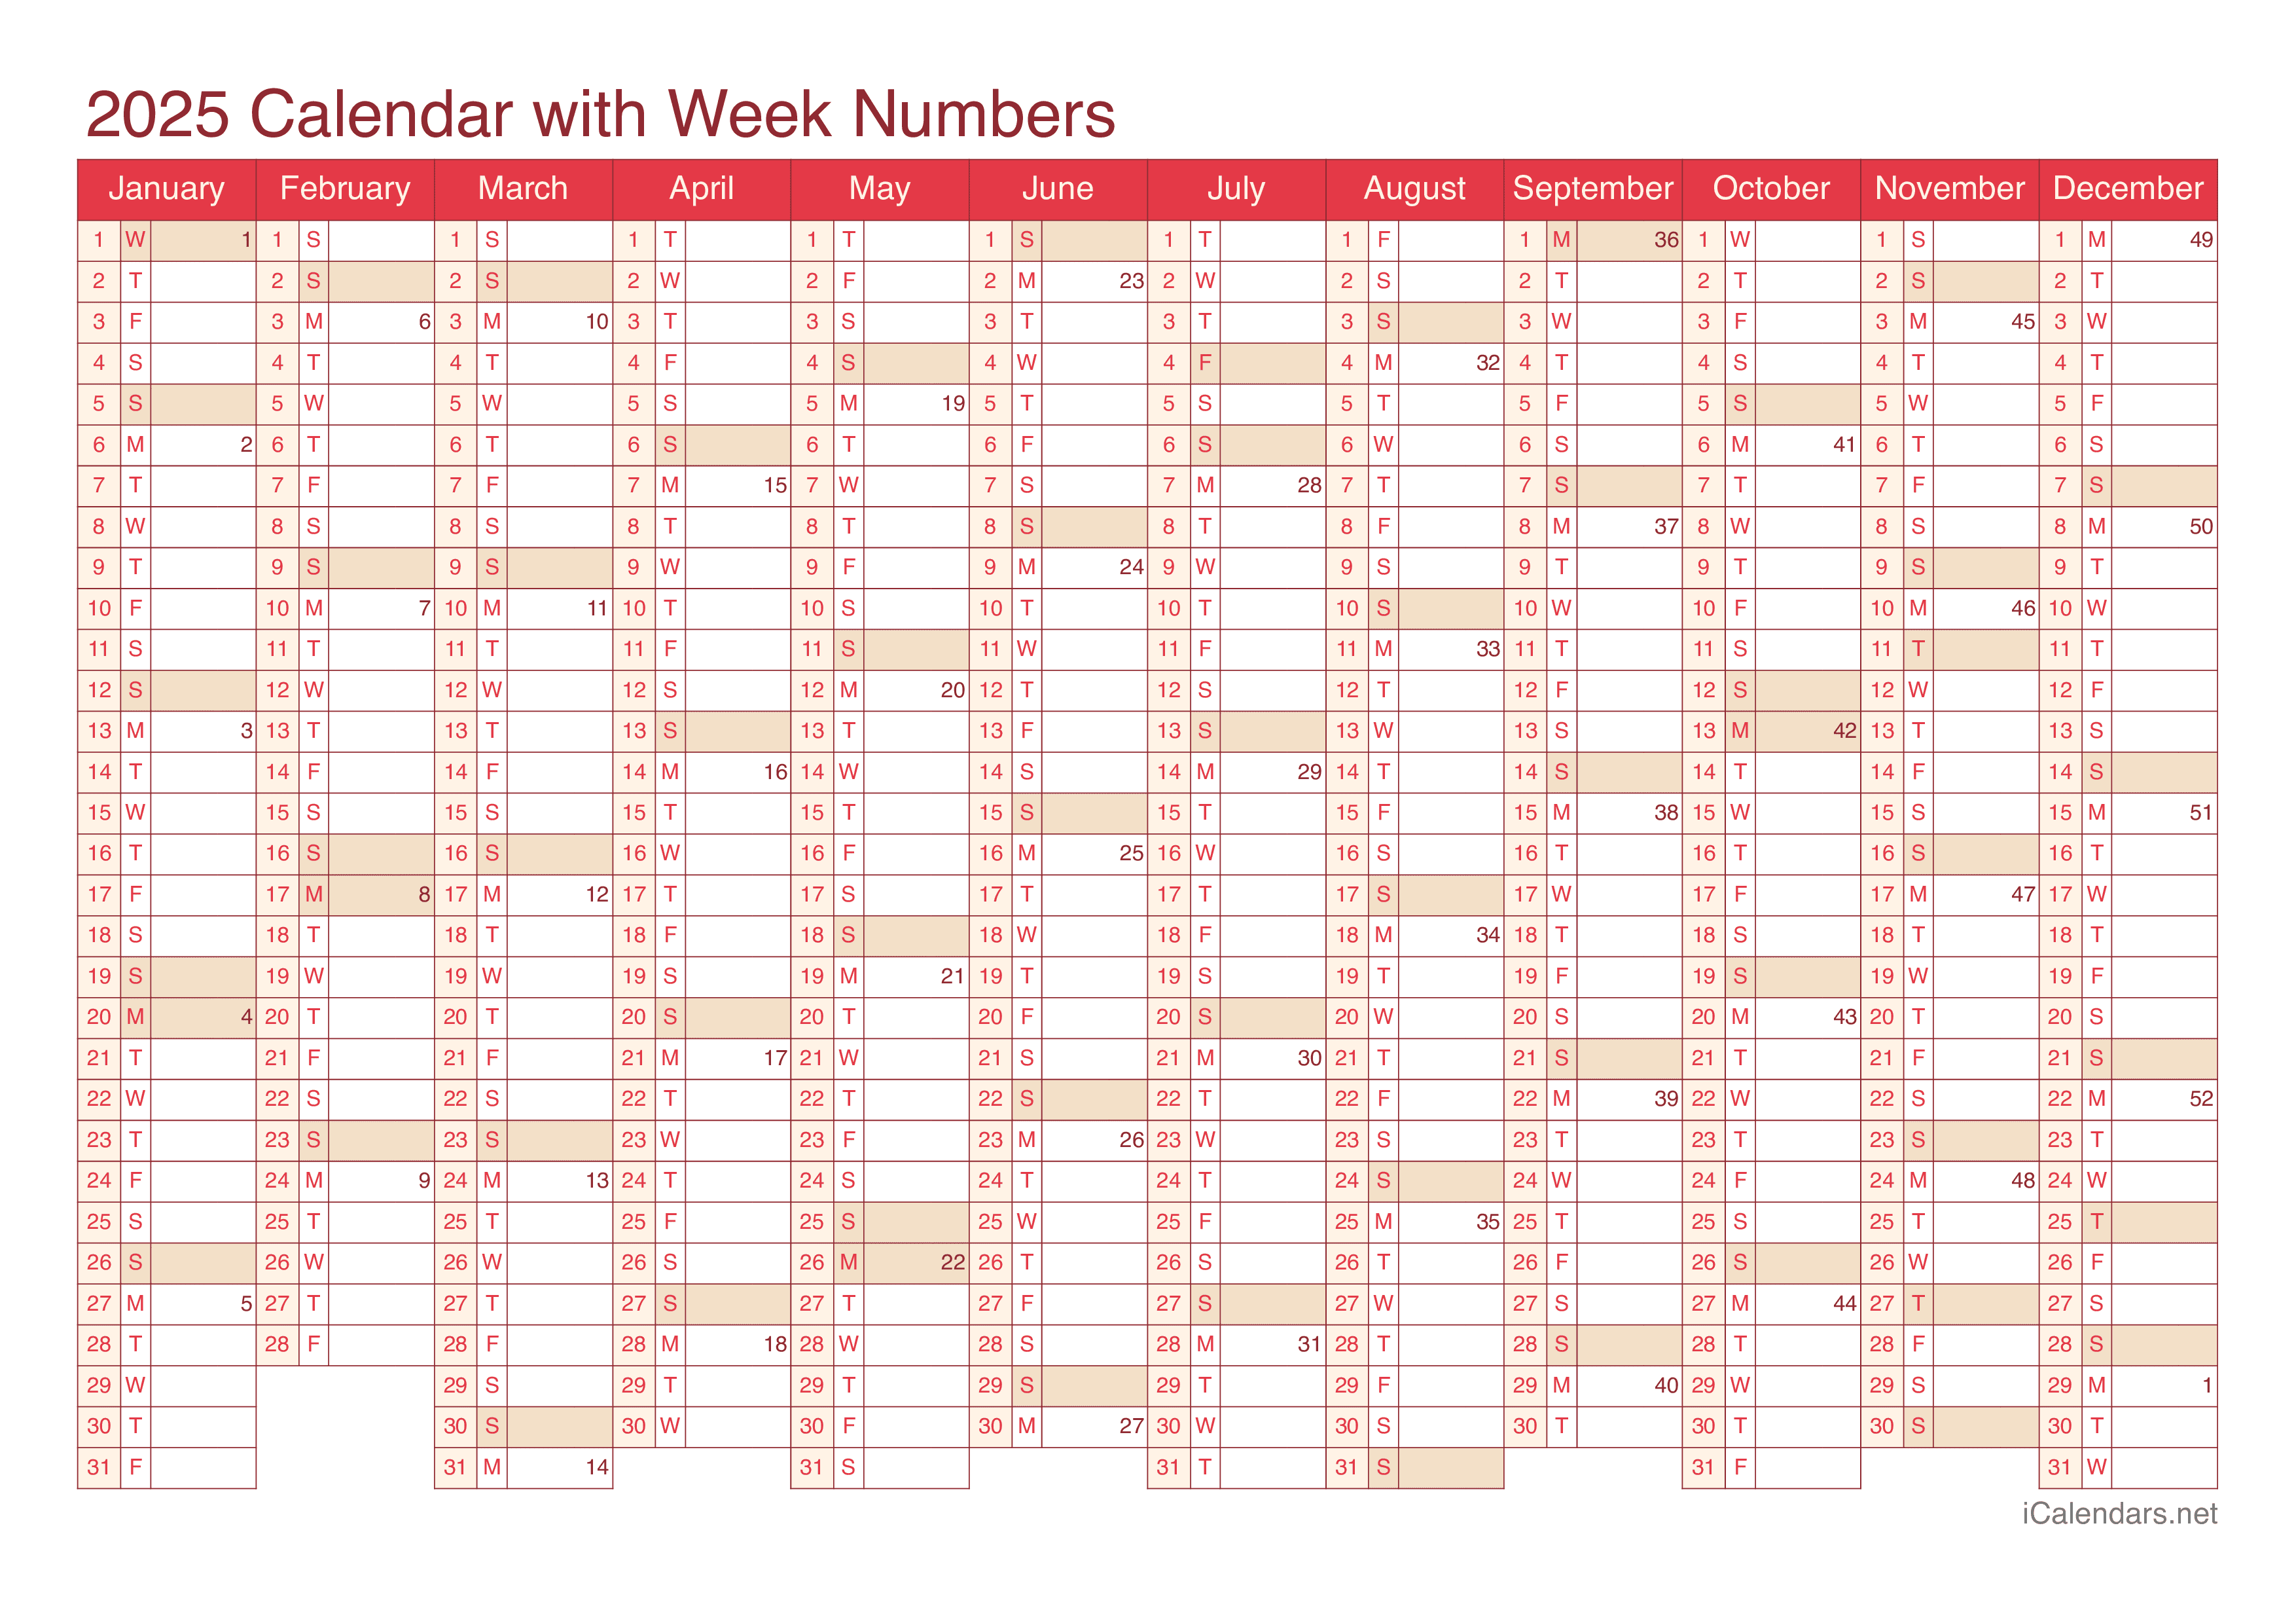 2025 Calendar with week numbers - Cherry